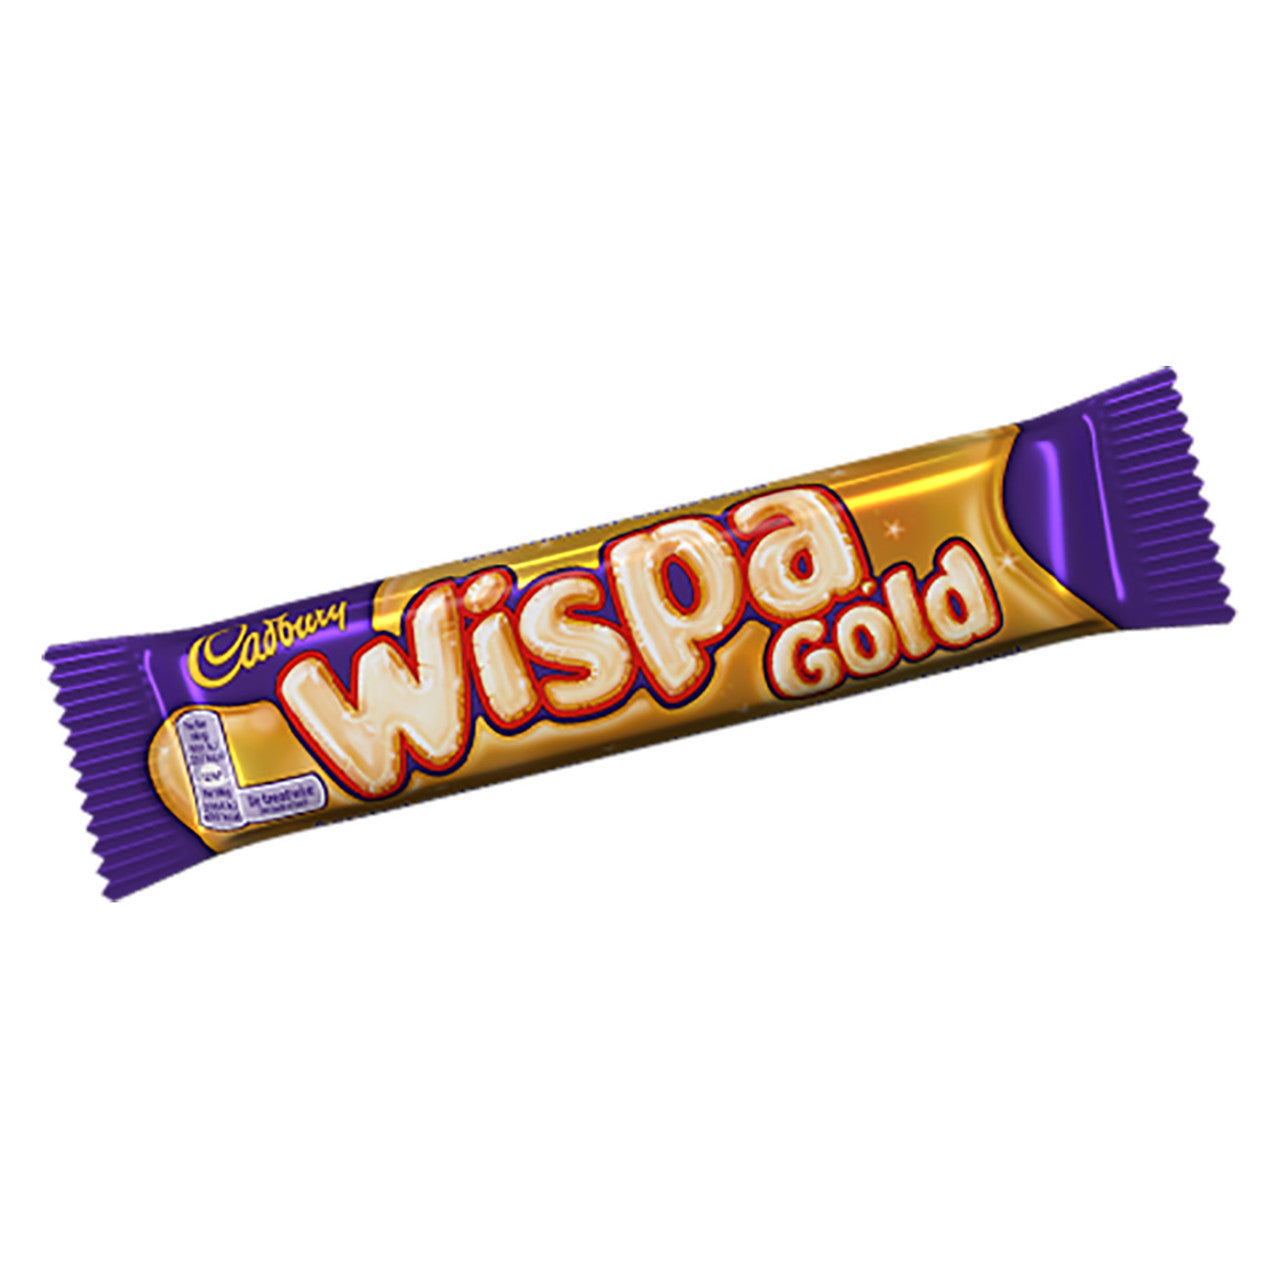 Cadbury Wispa Gold Chocolate Bar - 48g